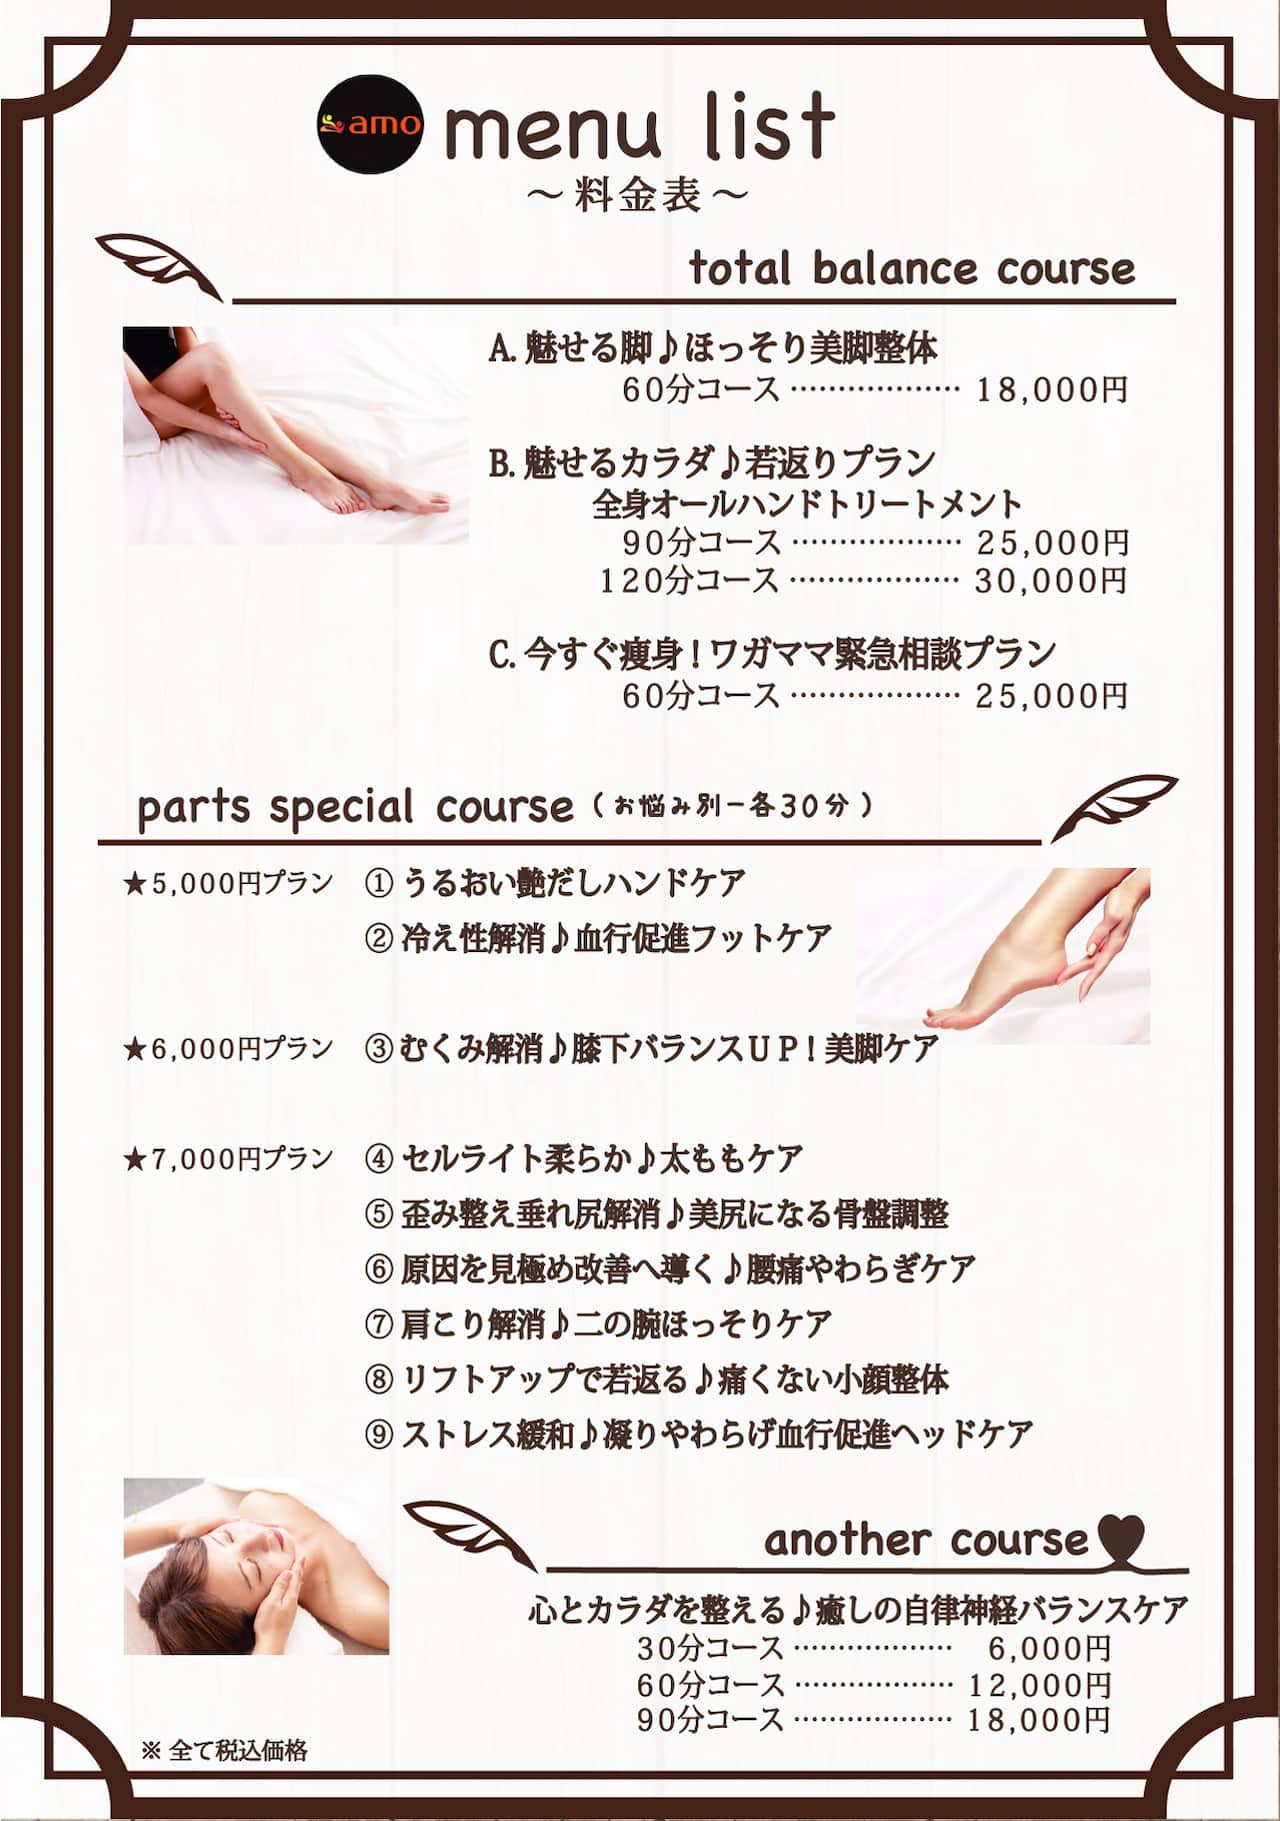 menu-osteopathy,bikyakuseitai-studio-amo,美脚整体スタジオamoのメニューリスト